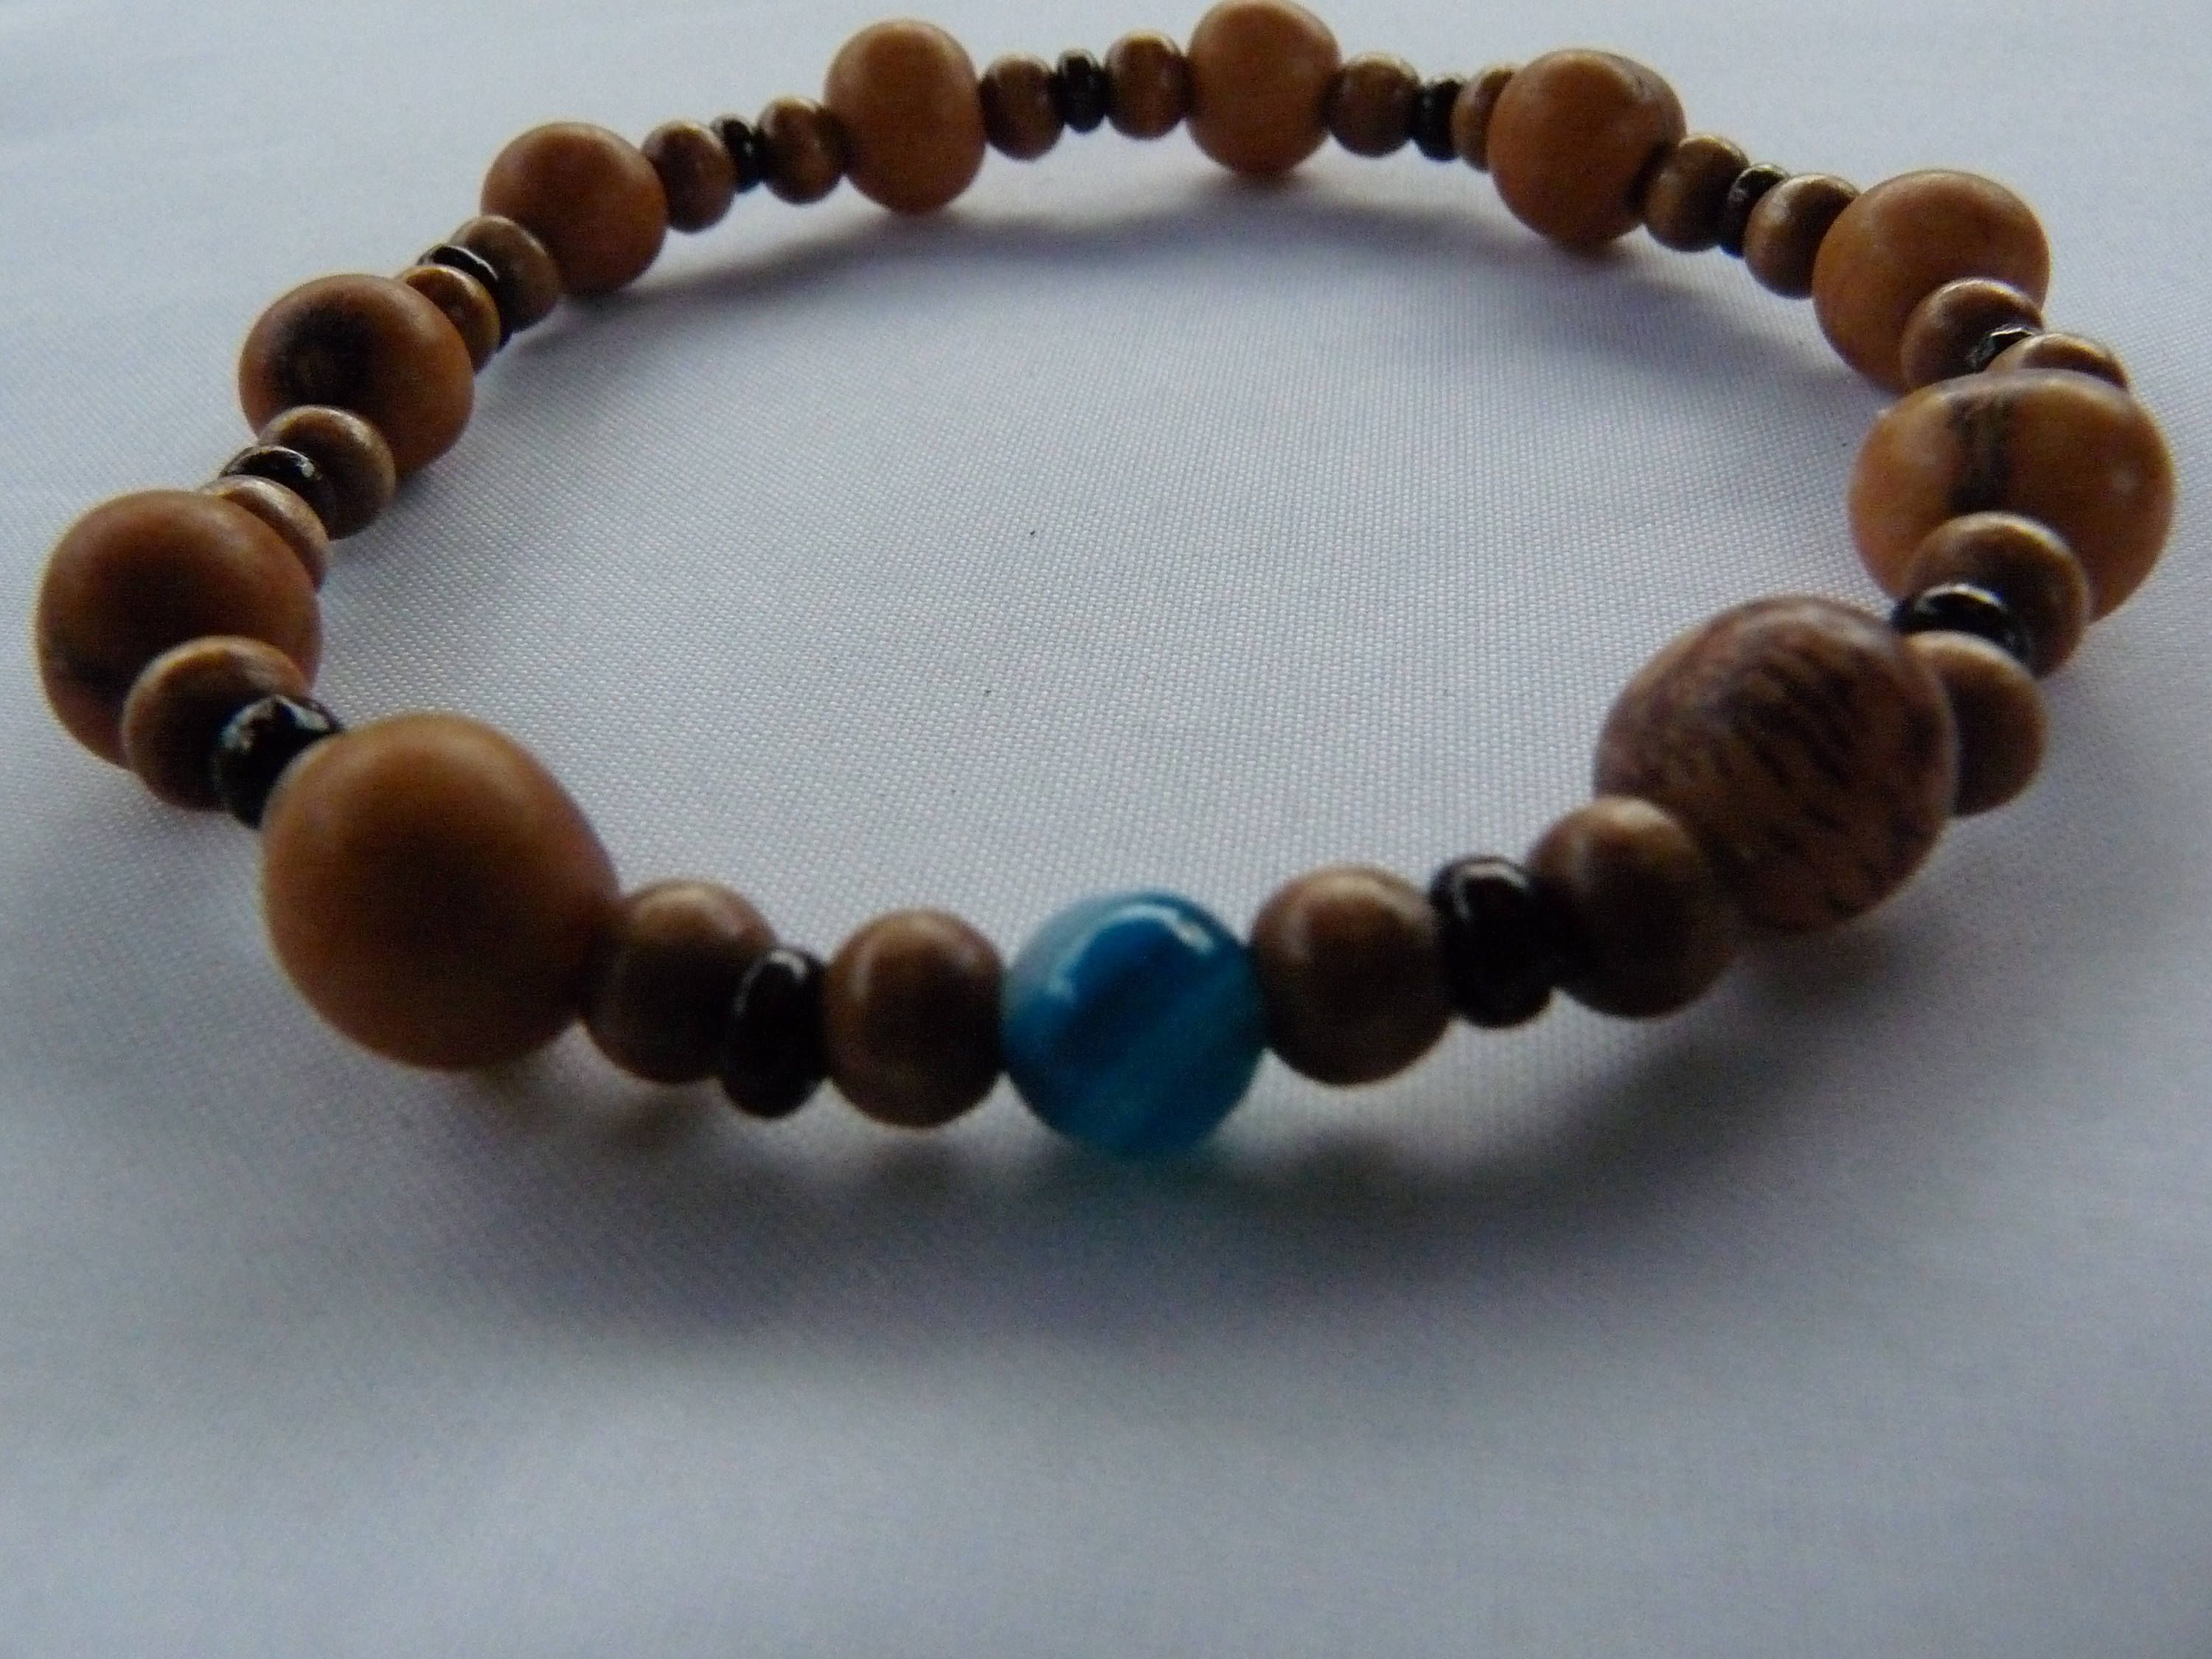 Acai Beads with blue stone stretch bracelet | Yoga bracelet and Beads